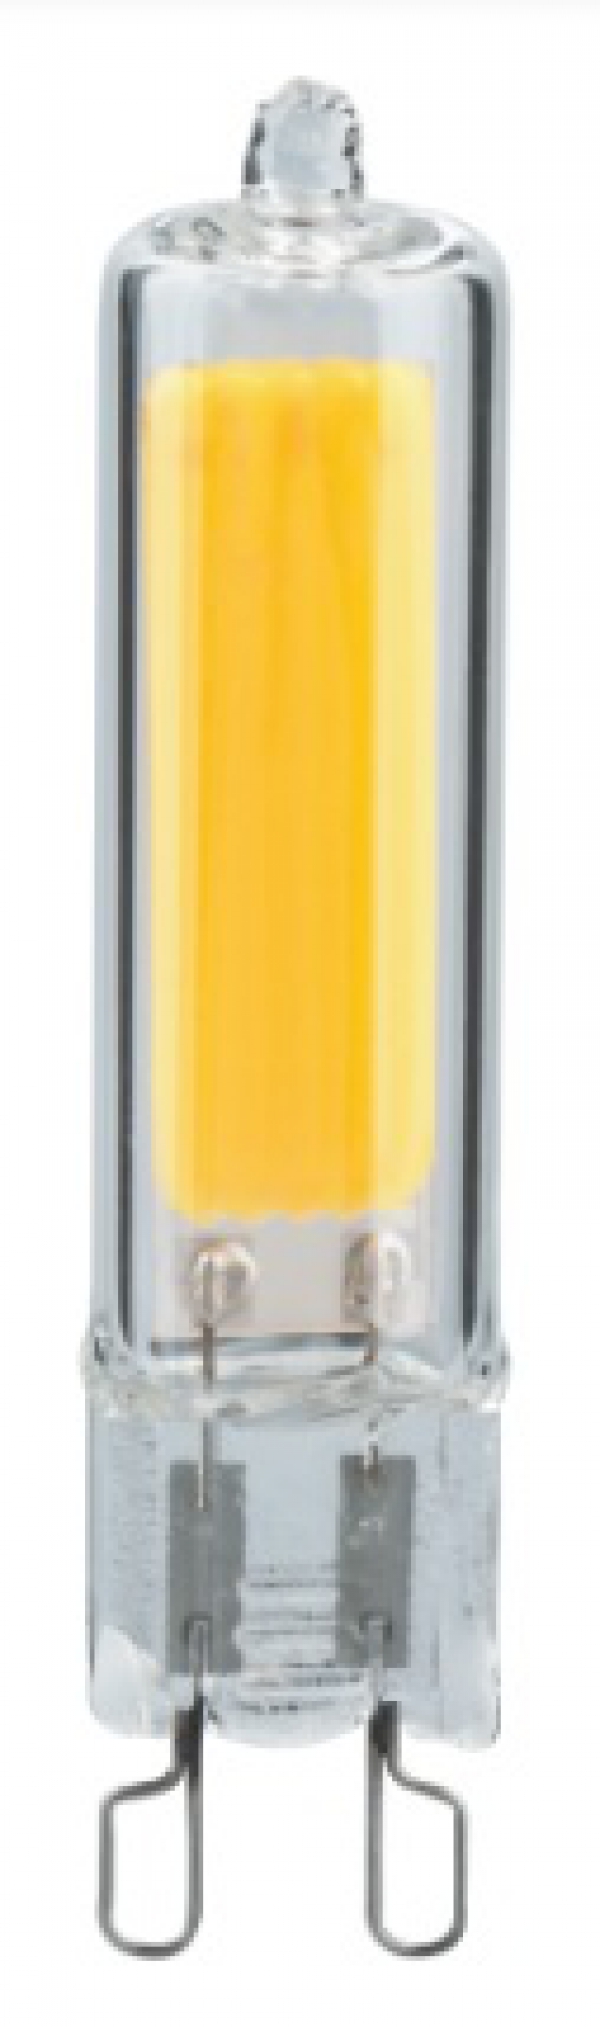 Лампа Navigator 61 491 NLL-G-G9-5-230-3K